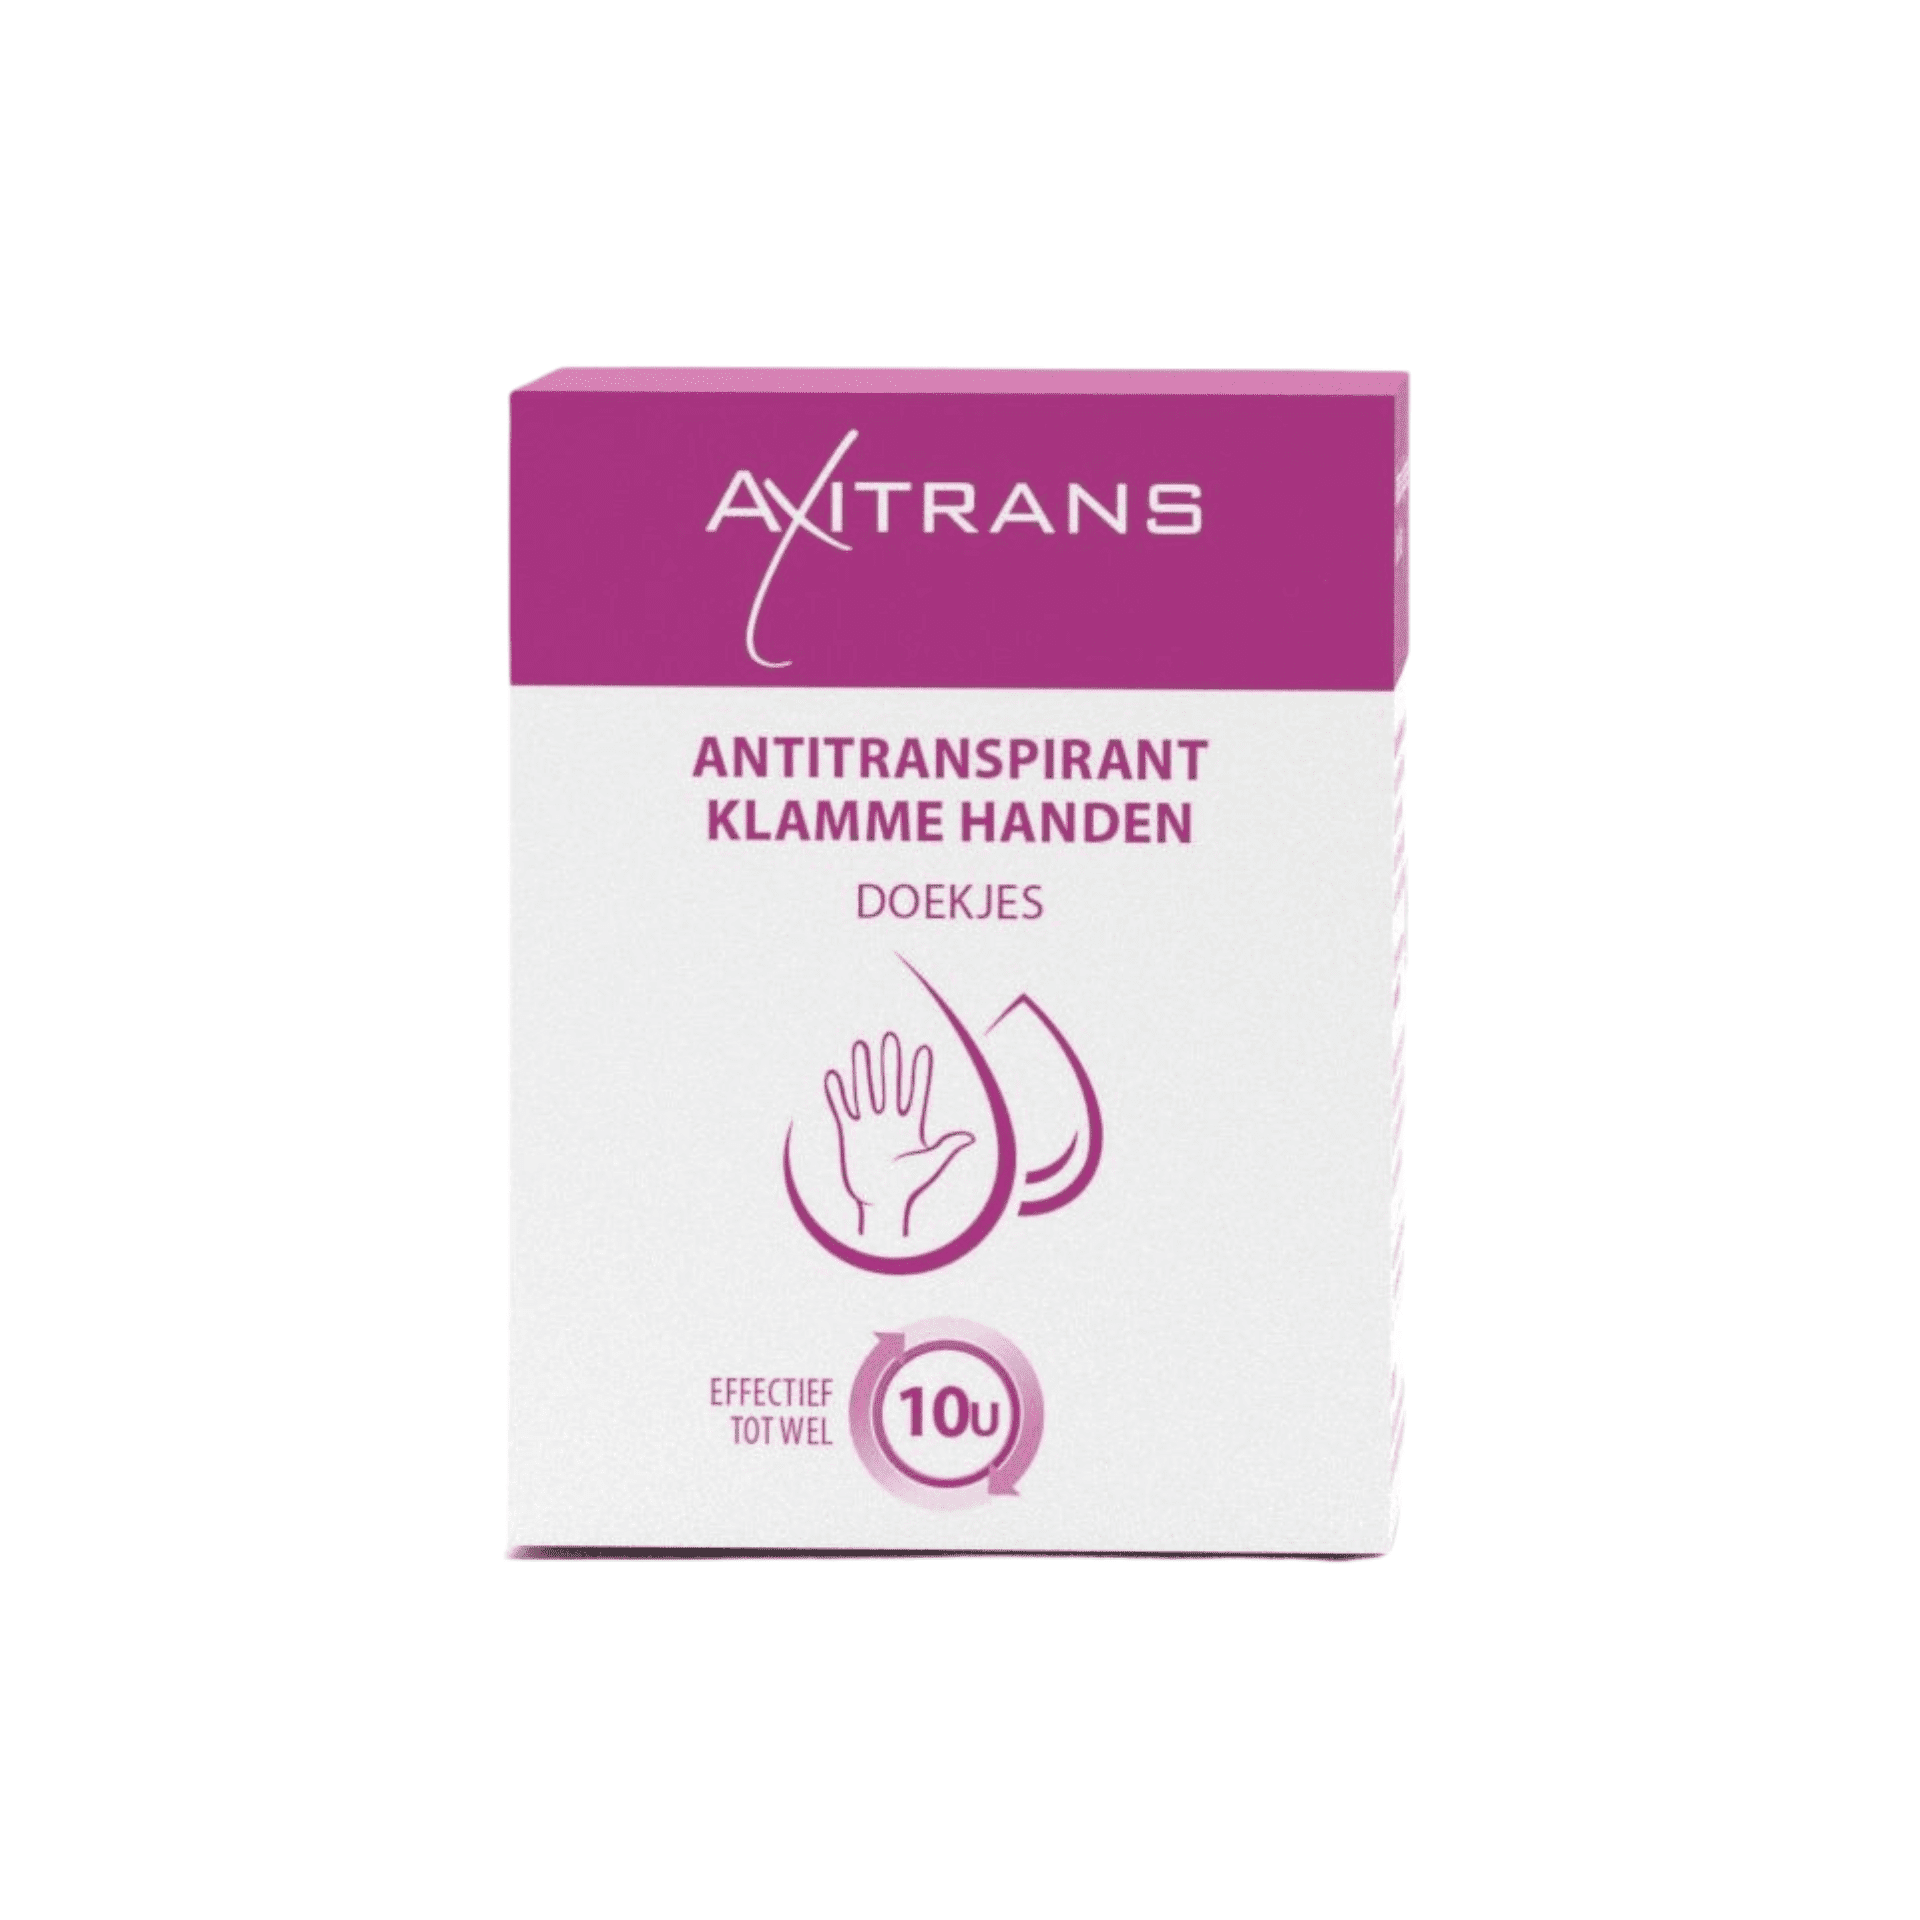 Axitrans Antitranspirant Klamme Handen Doekjes